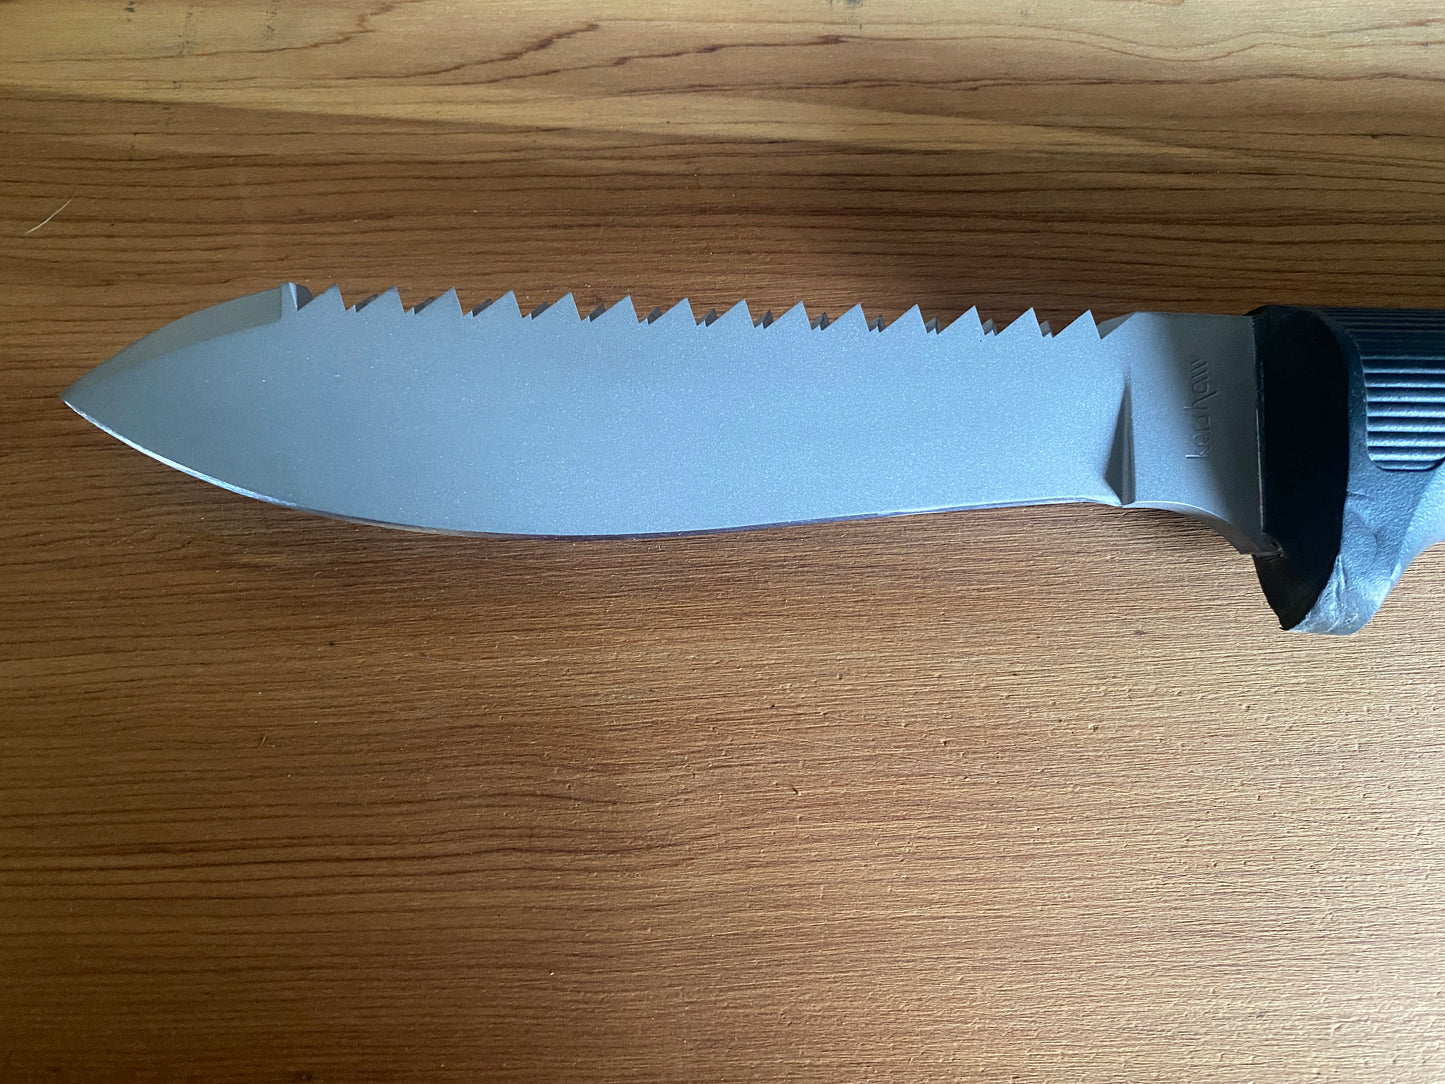 Kershaw 1005 Survival Knife